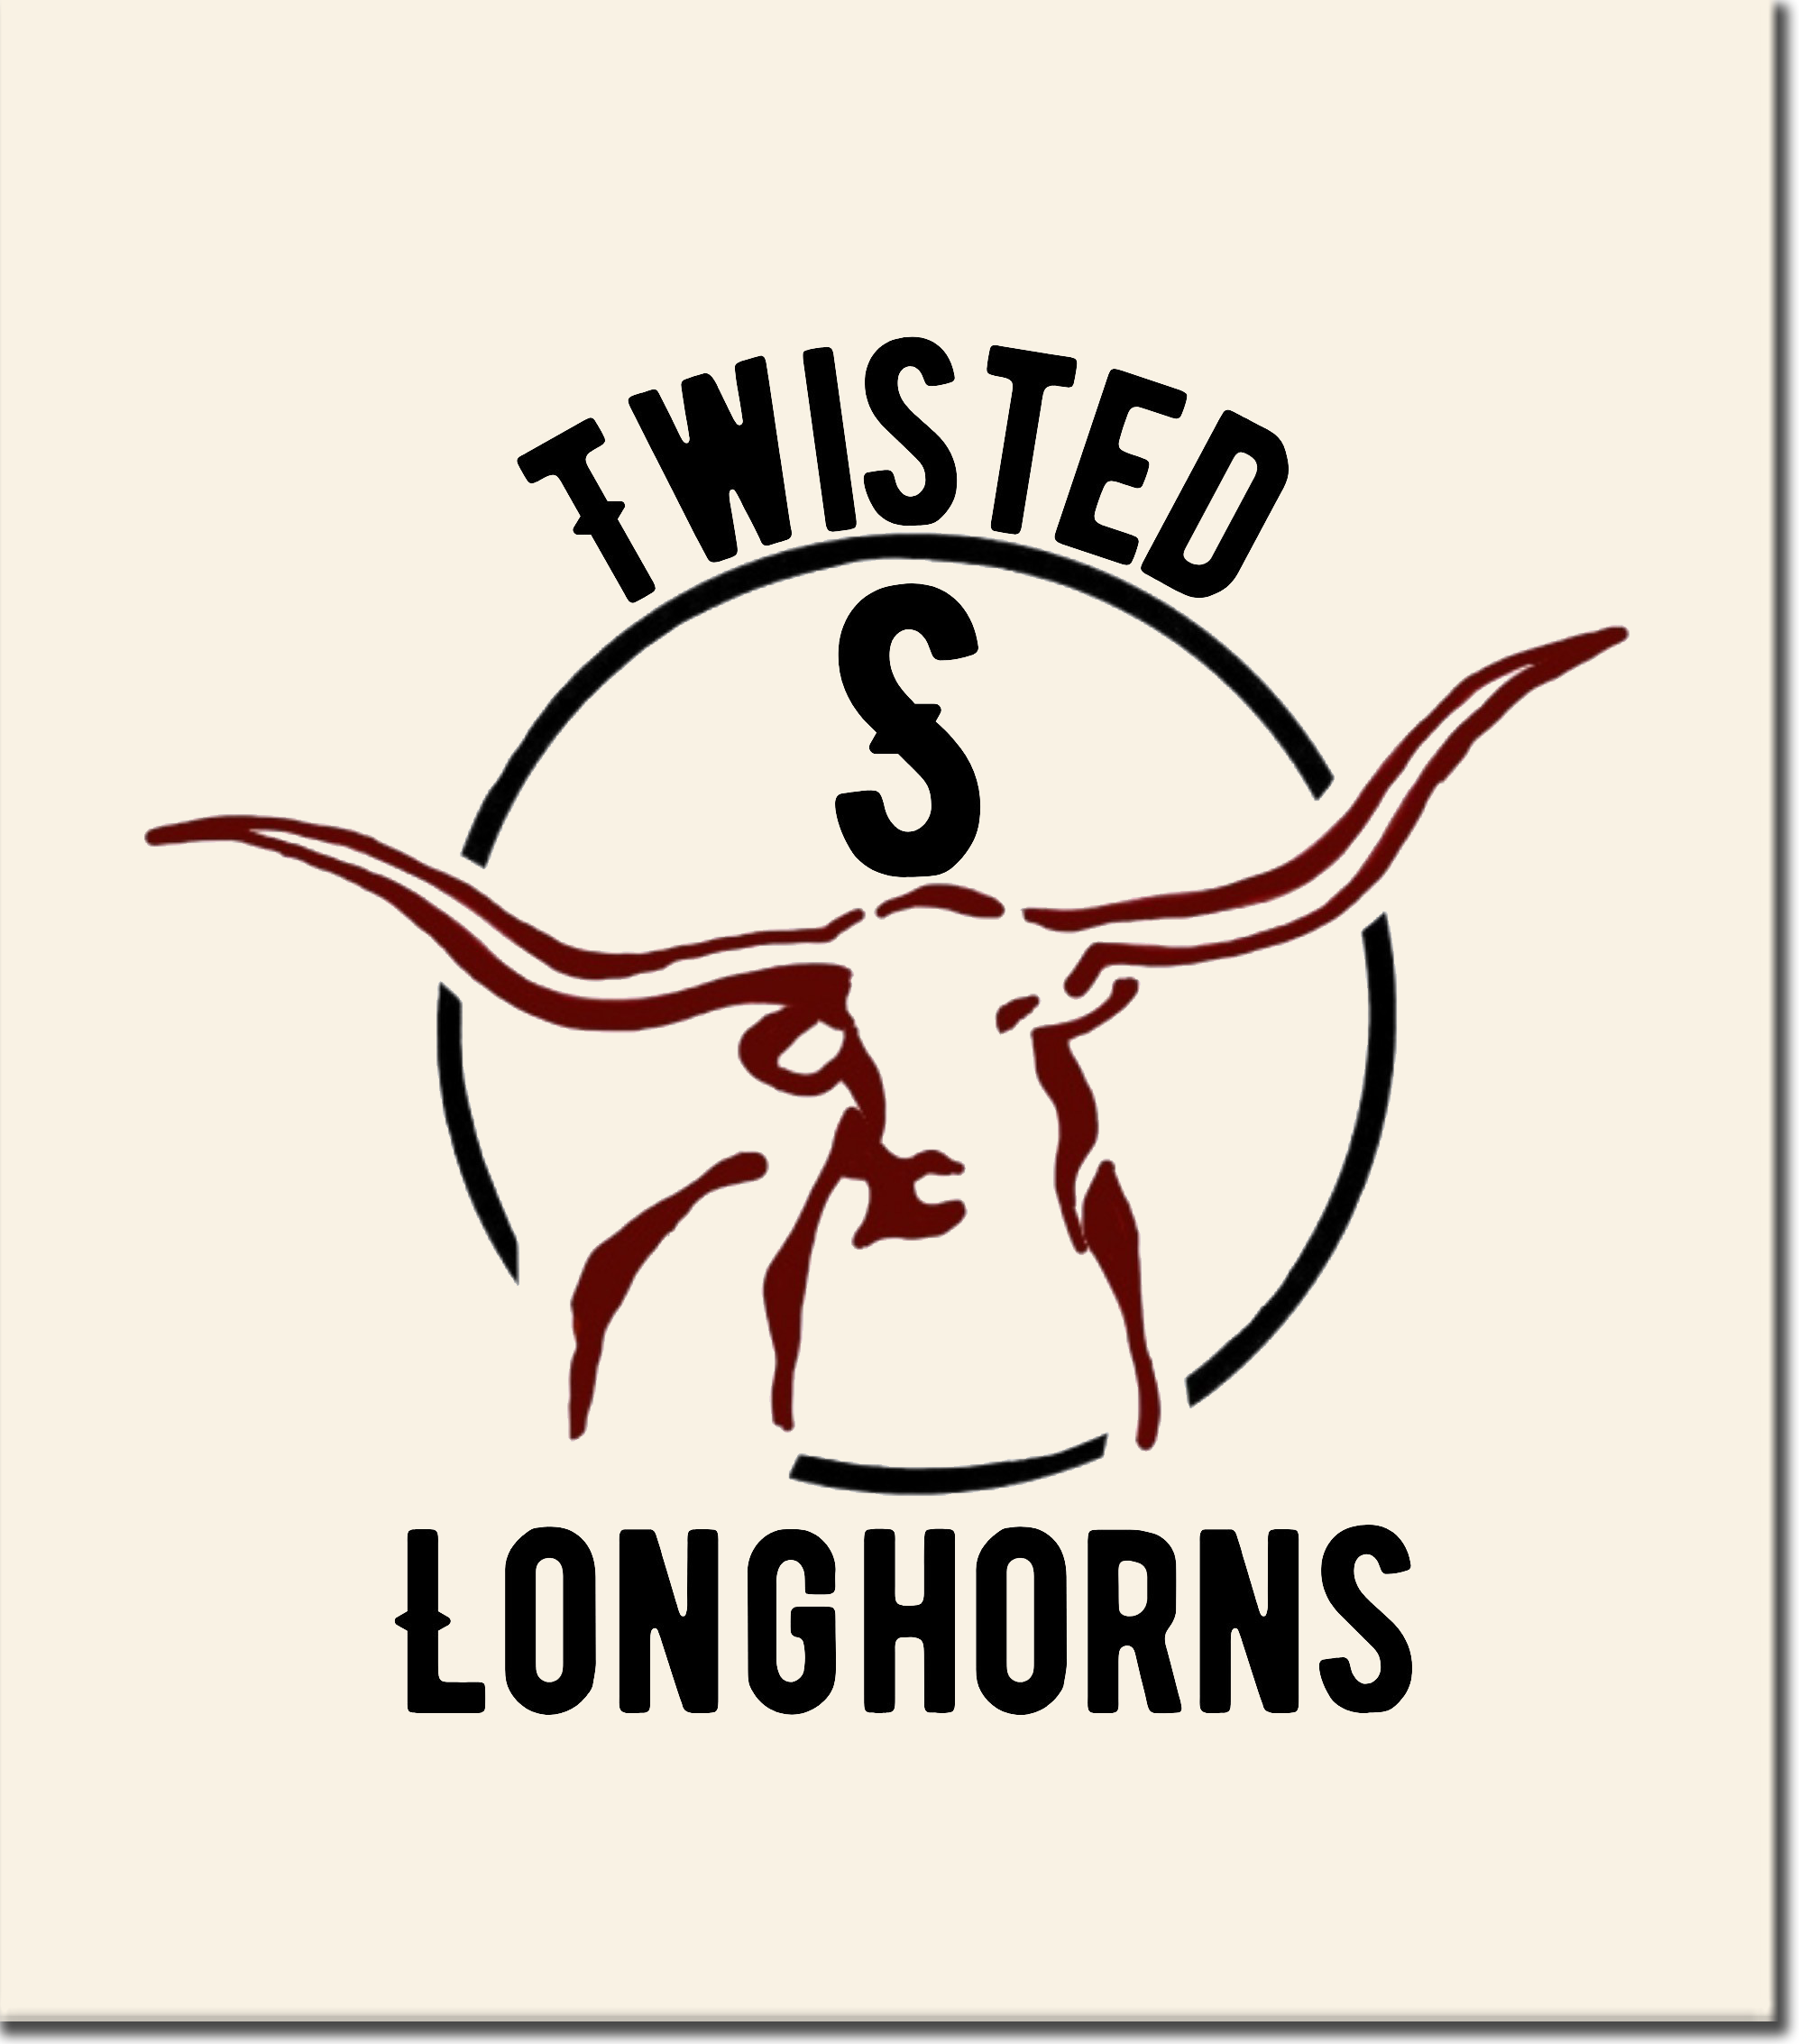 Twisted S Longhorns logo